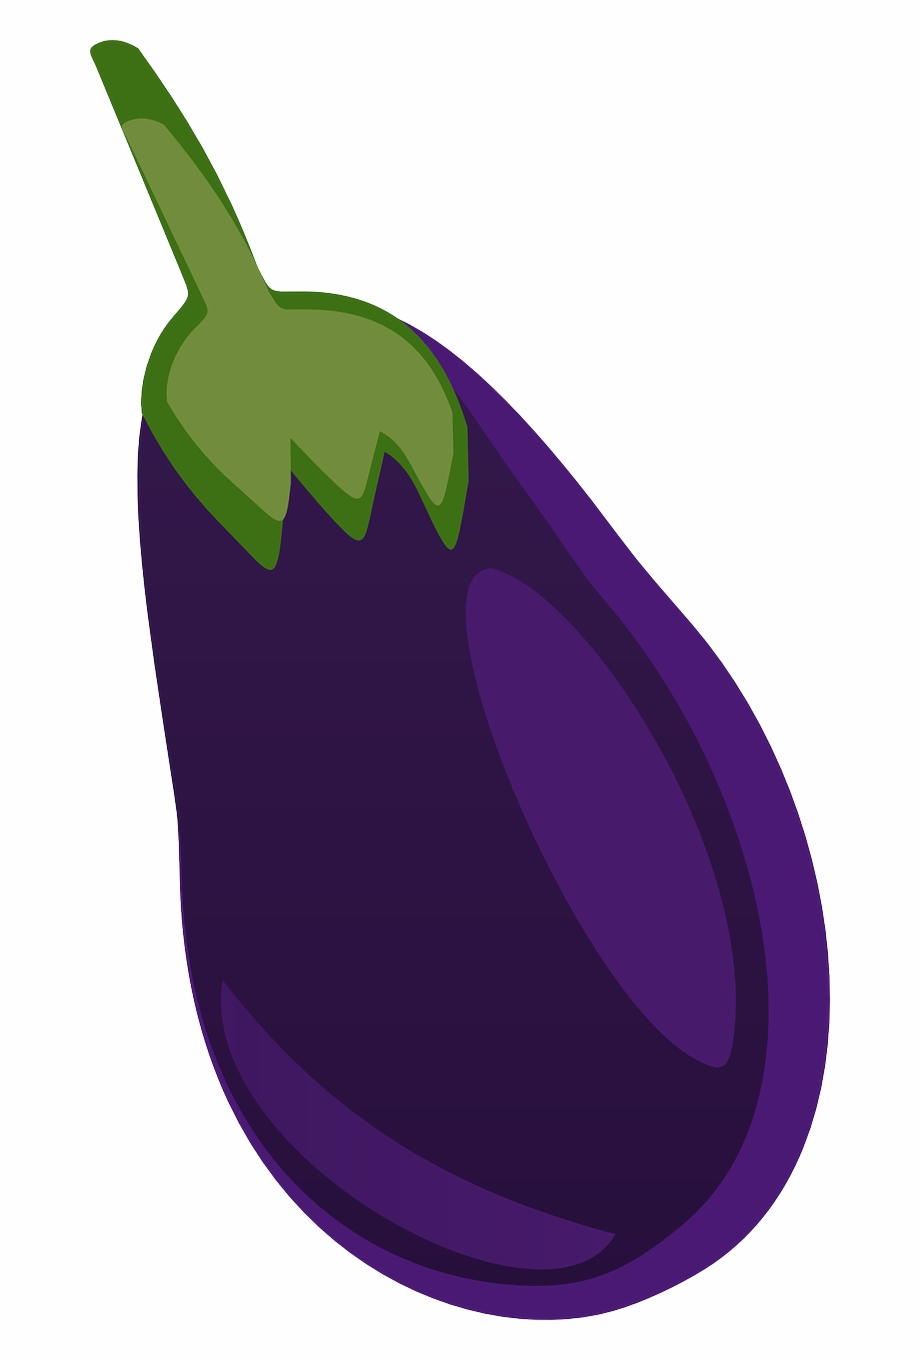 Eggplant scroll clipart.